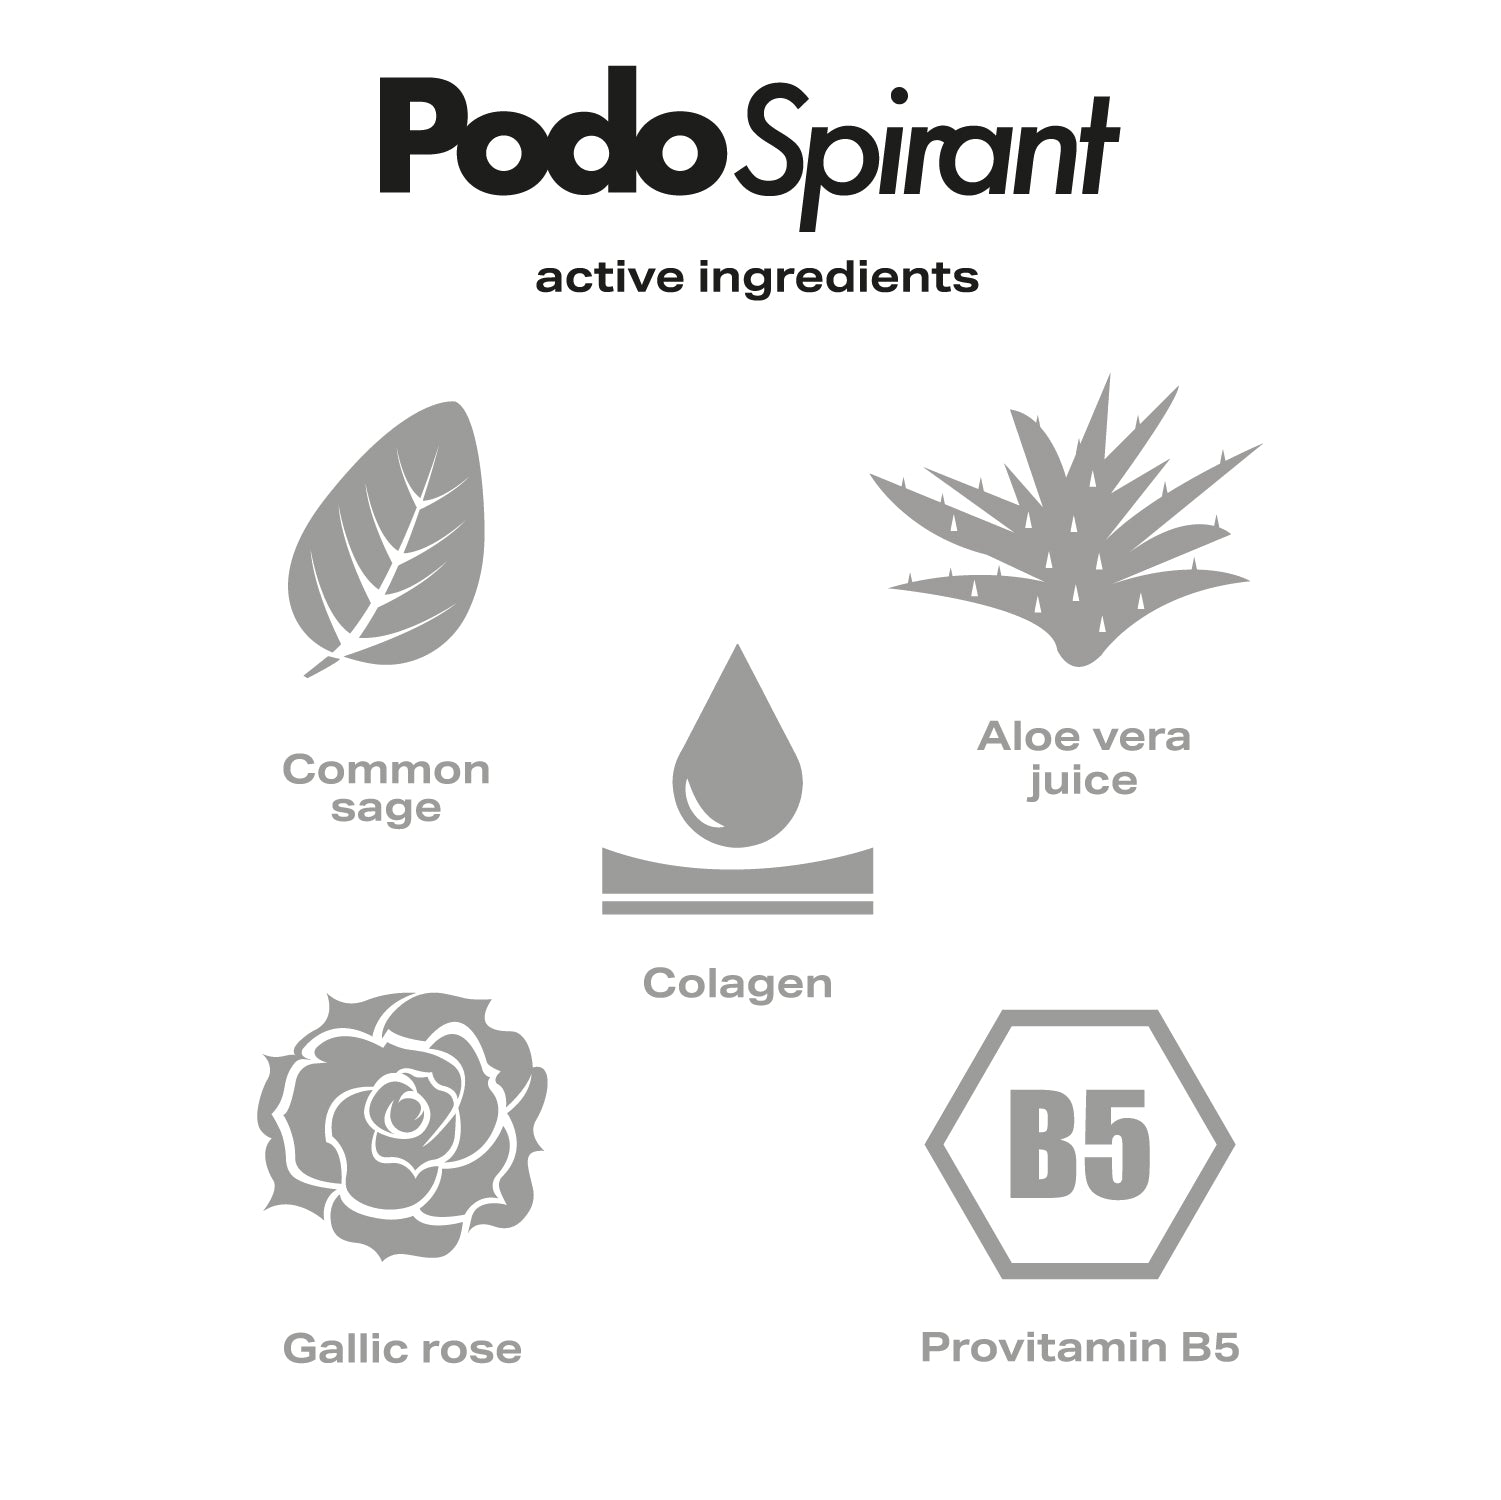 PodoSpirant - sweat protection 50ml - Trade  (10 pcs) Podoland